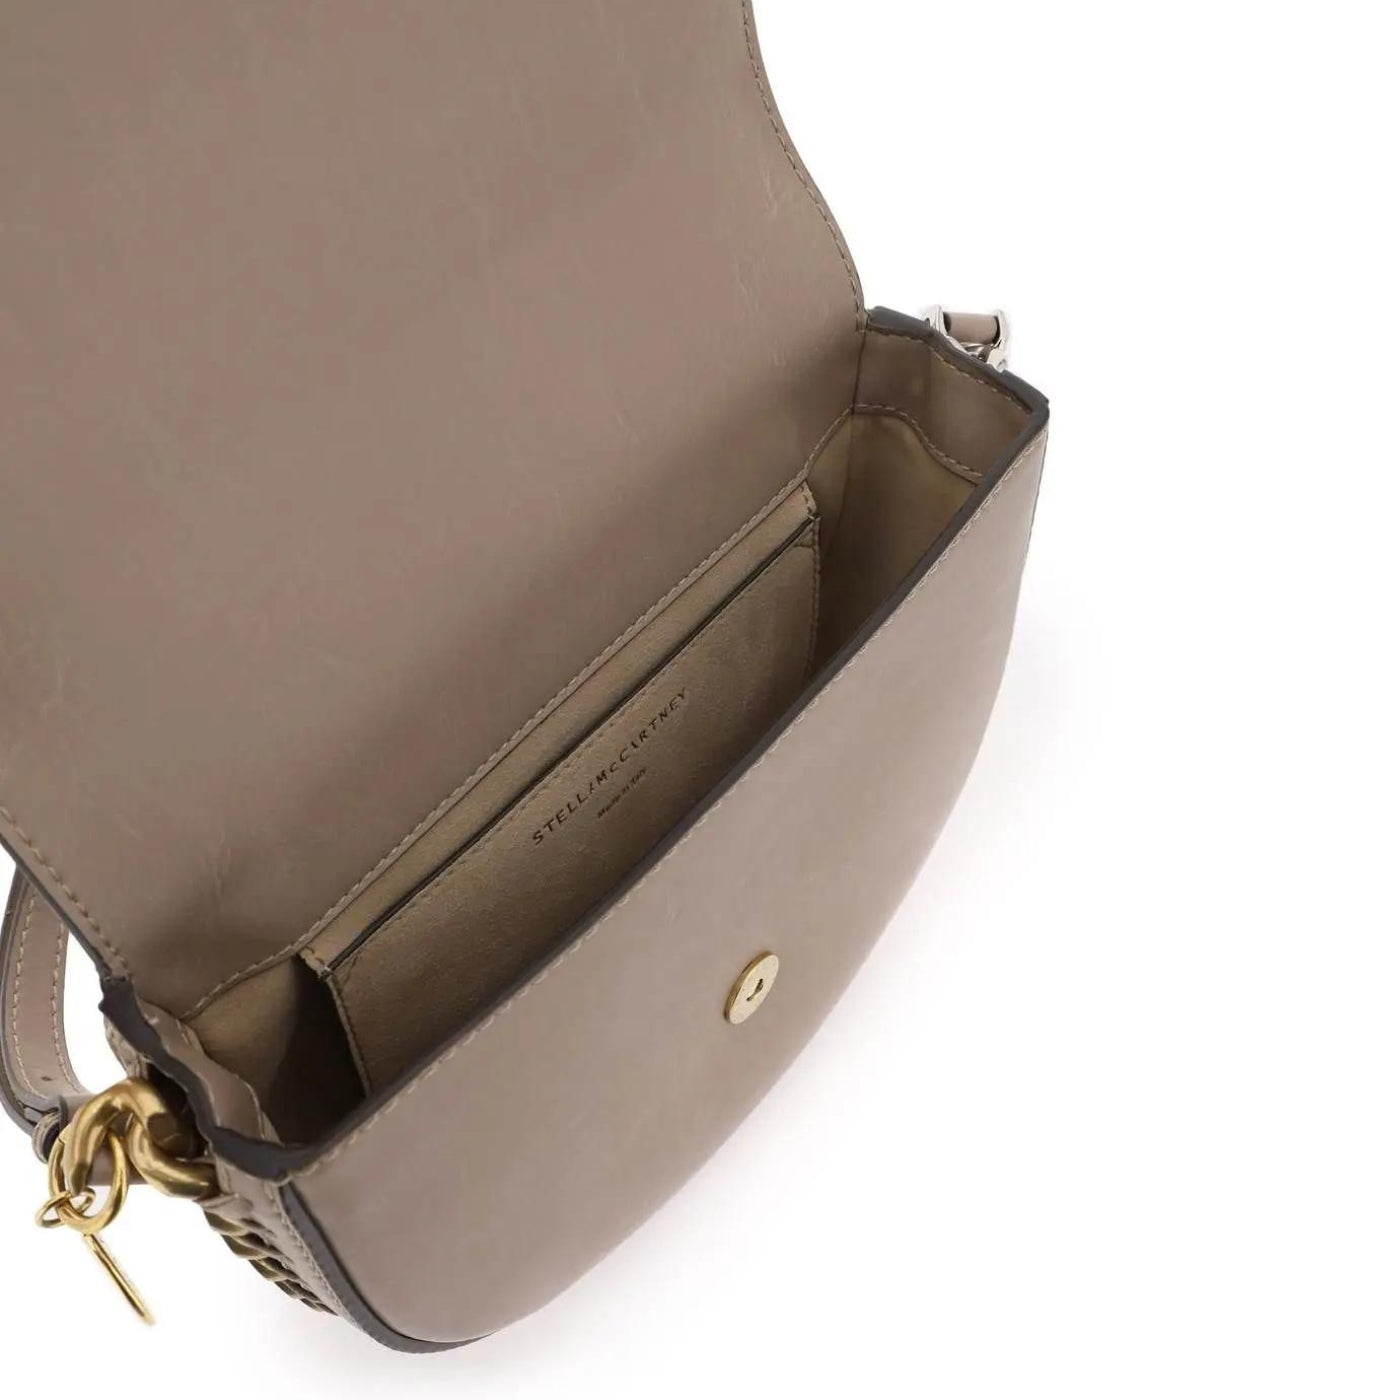 Frayme Medium Flap Shoulder Bag in Beige Handbags STELLA MCCARTNEY - LOLAMIR